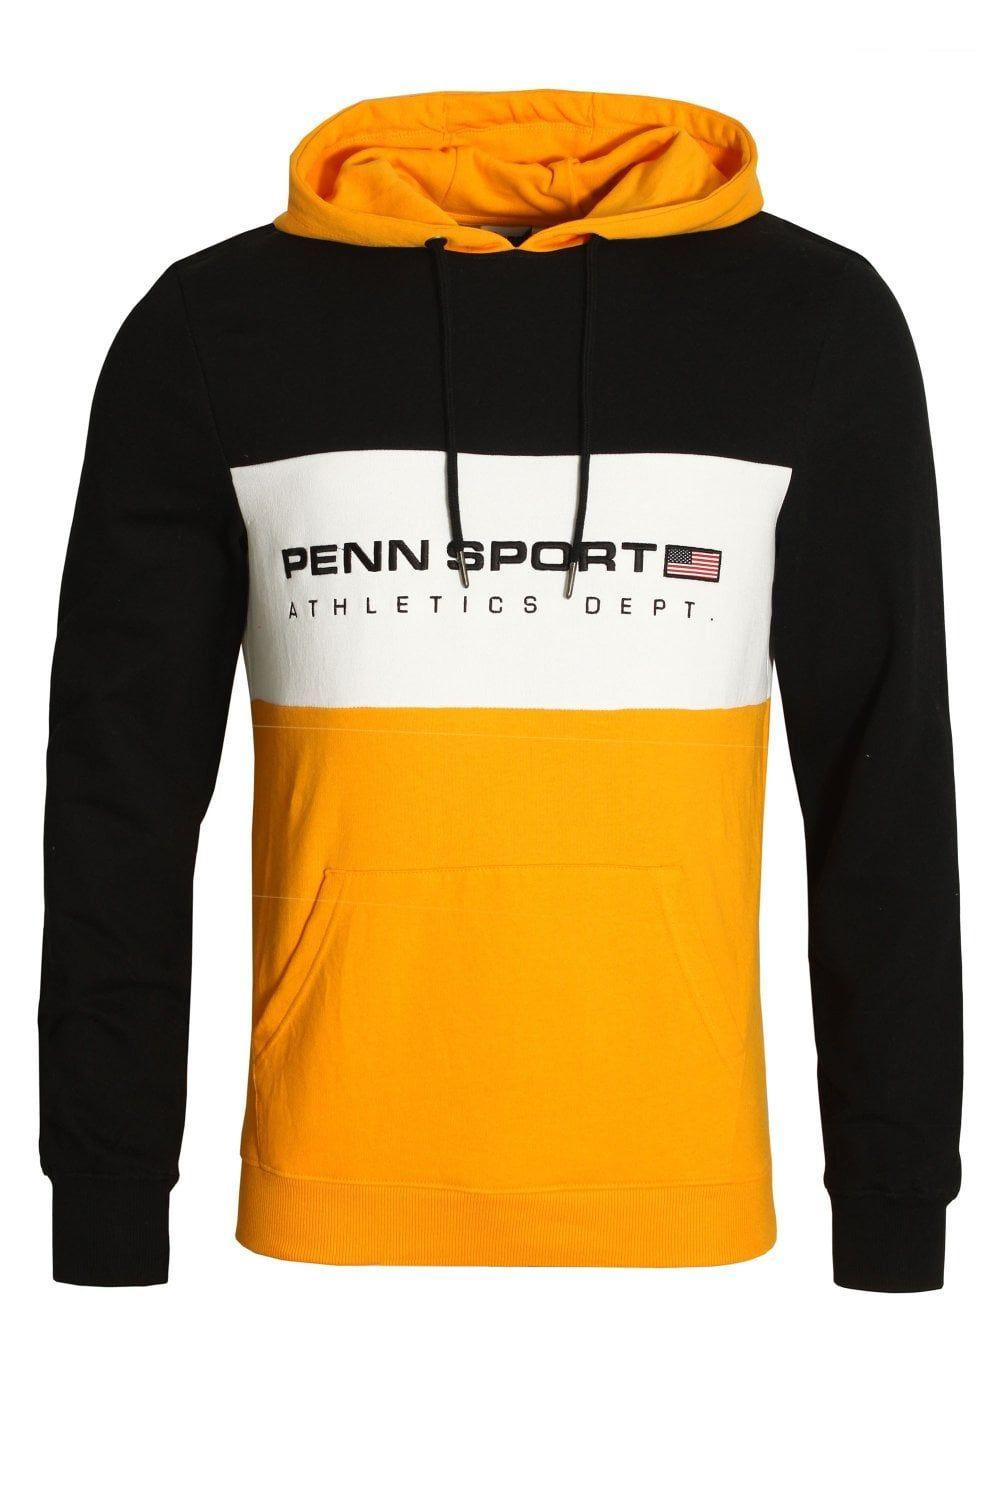 Orange Block Logo - Penn Sport Block Logo OTH Hoodie | Shop Penn Sport Hoodies & Sweats